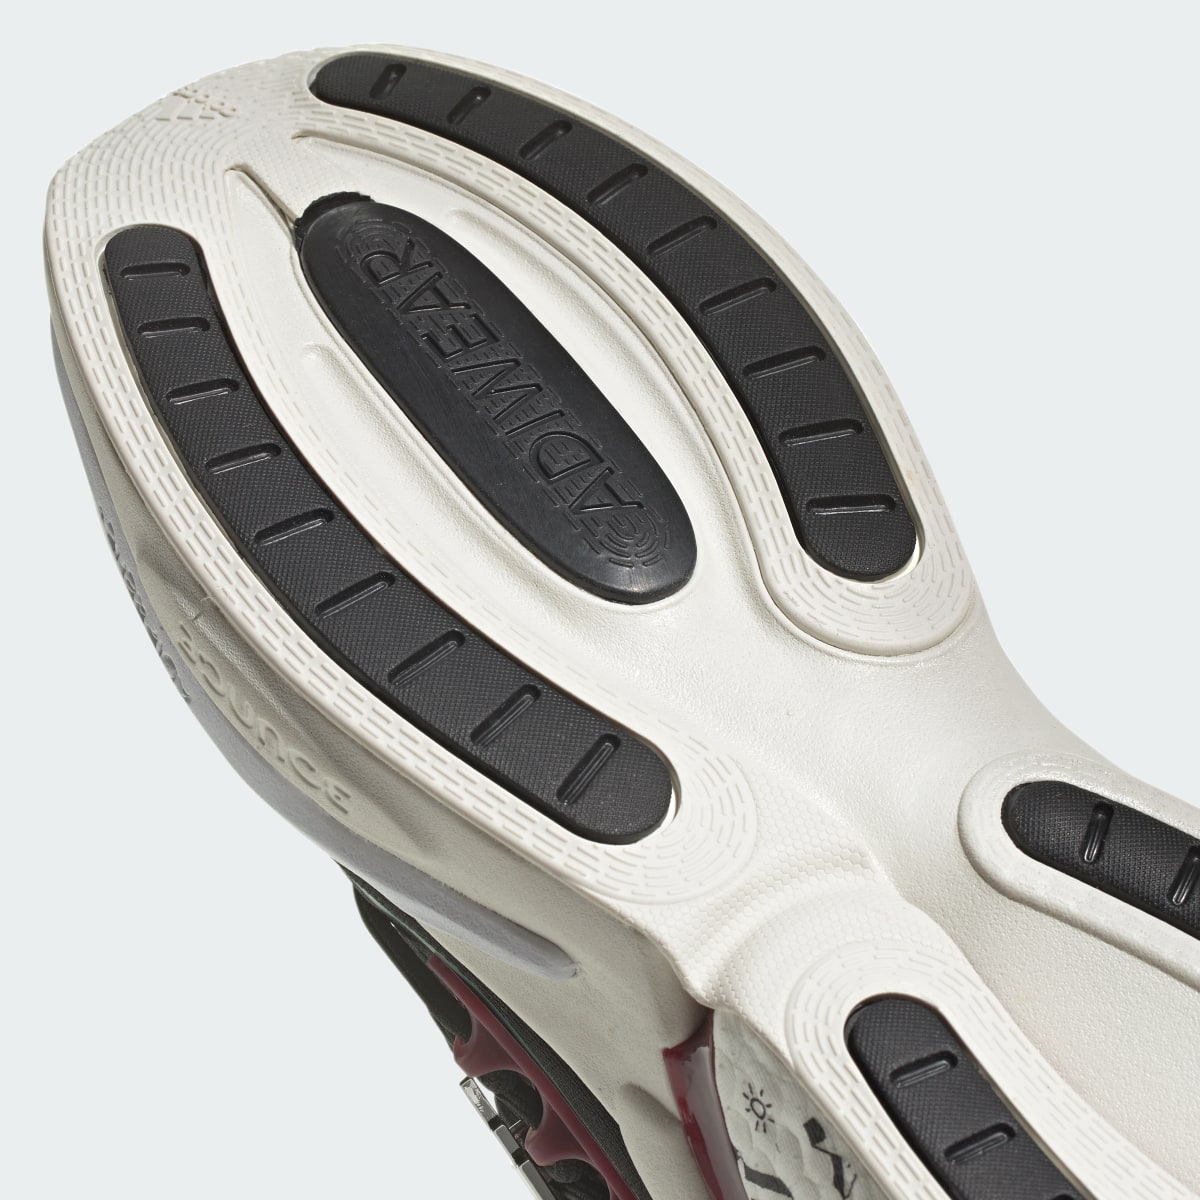 Adidas Alphaboost V1 Ayakkabı. 4